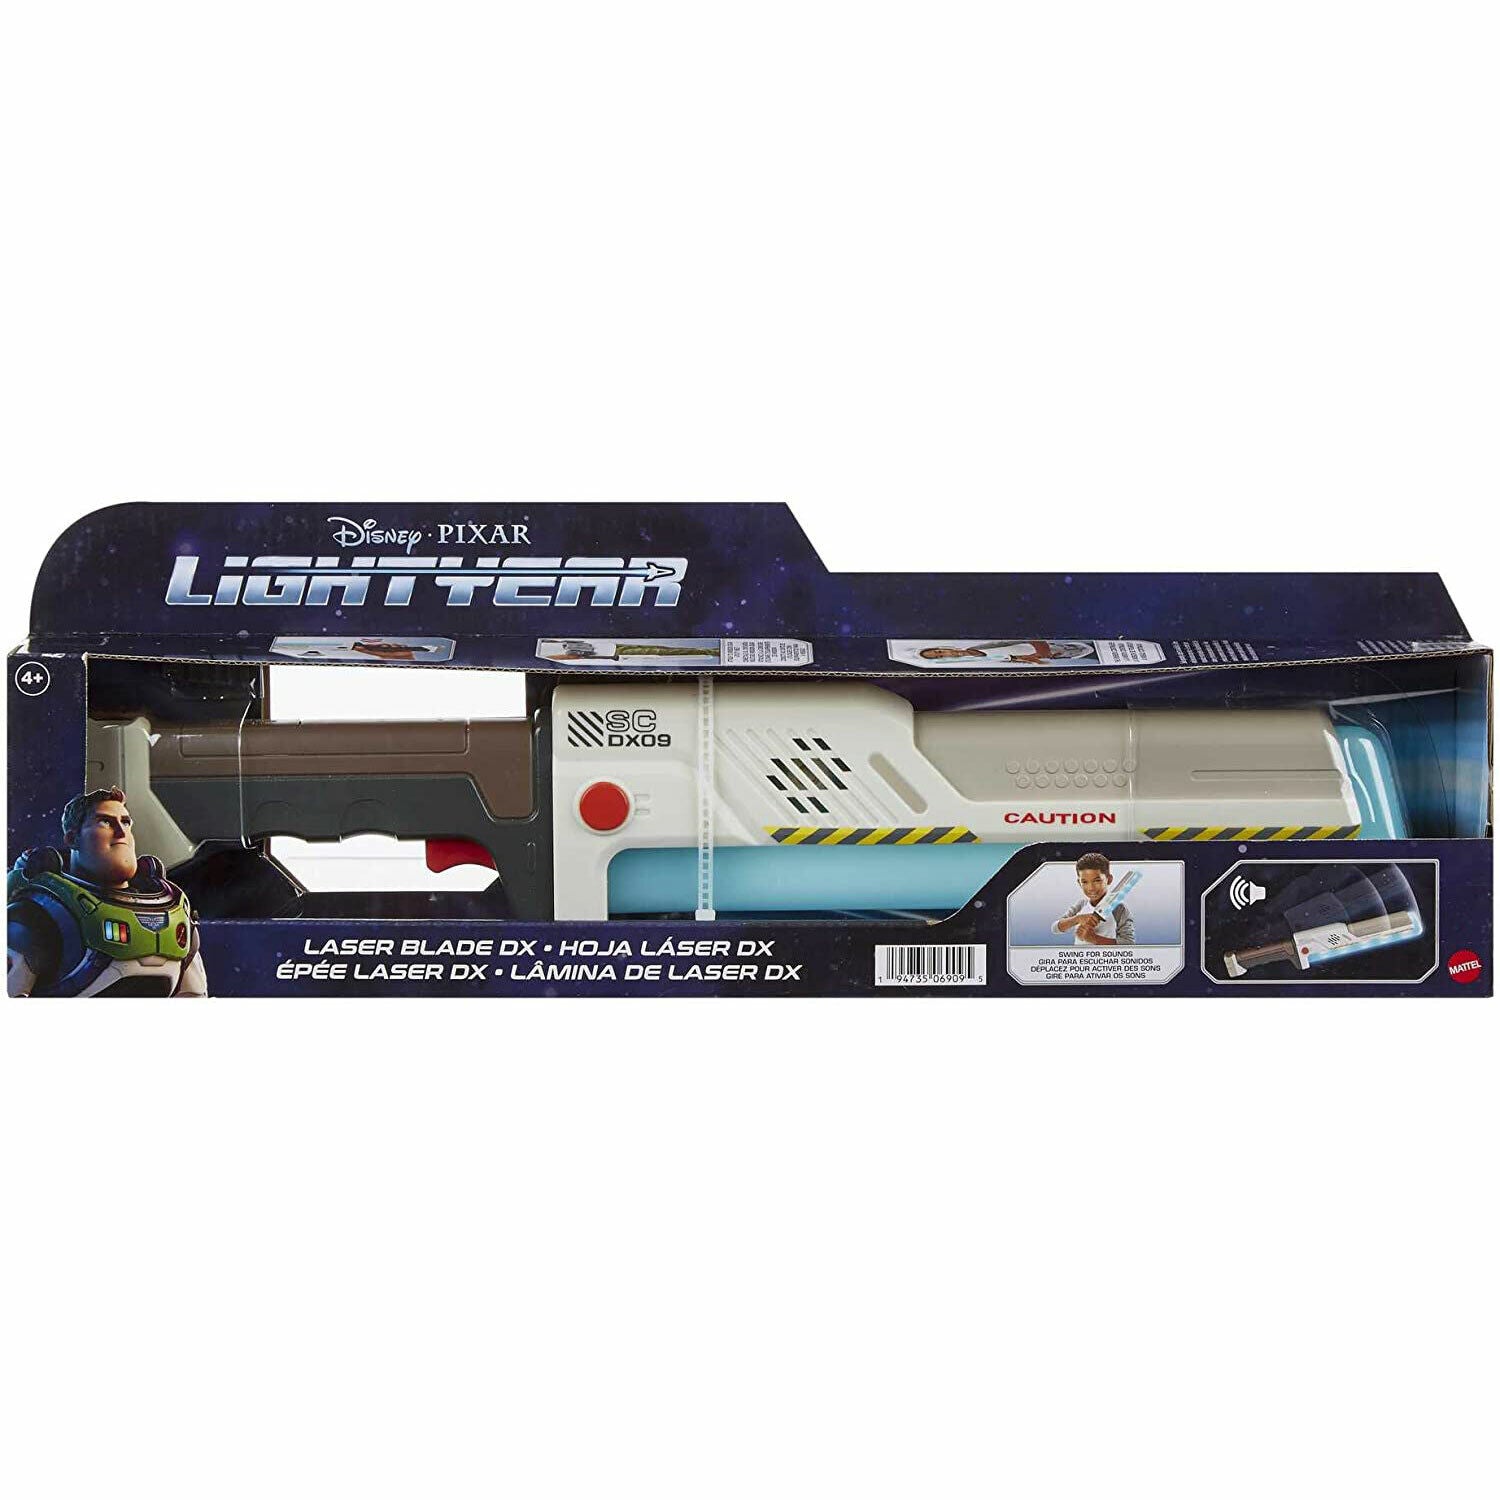 New Disney Pixar Lightyear Laser Blade DX Roleplay Toy